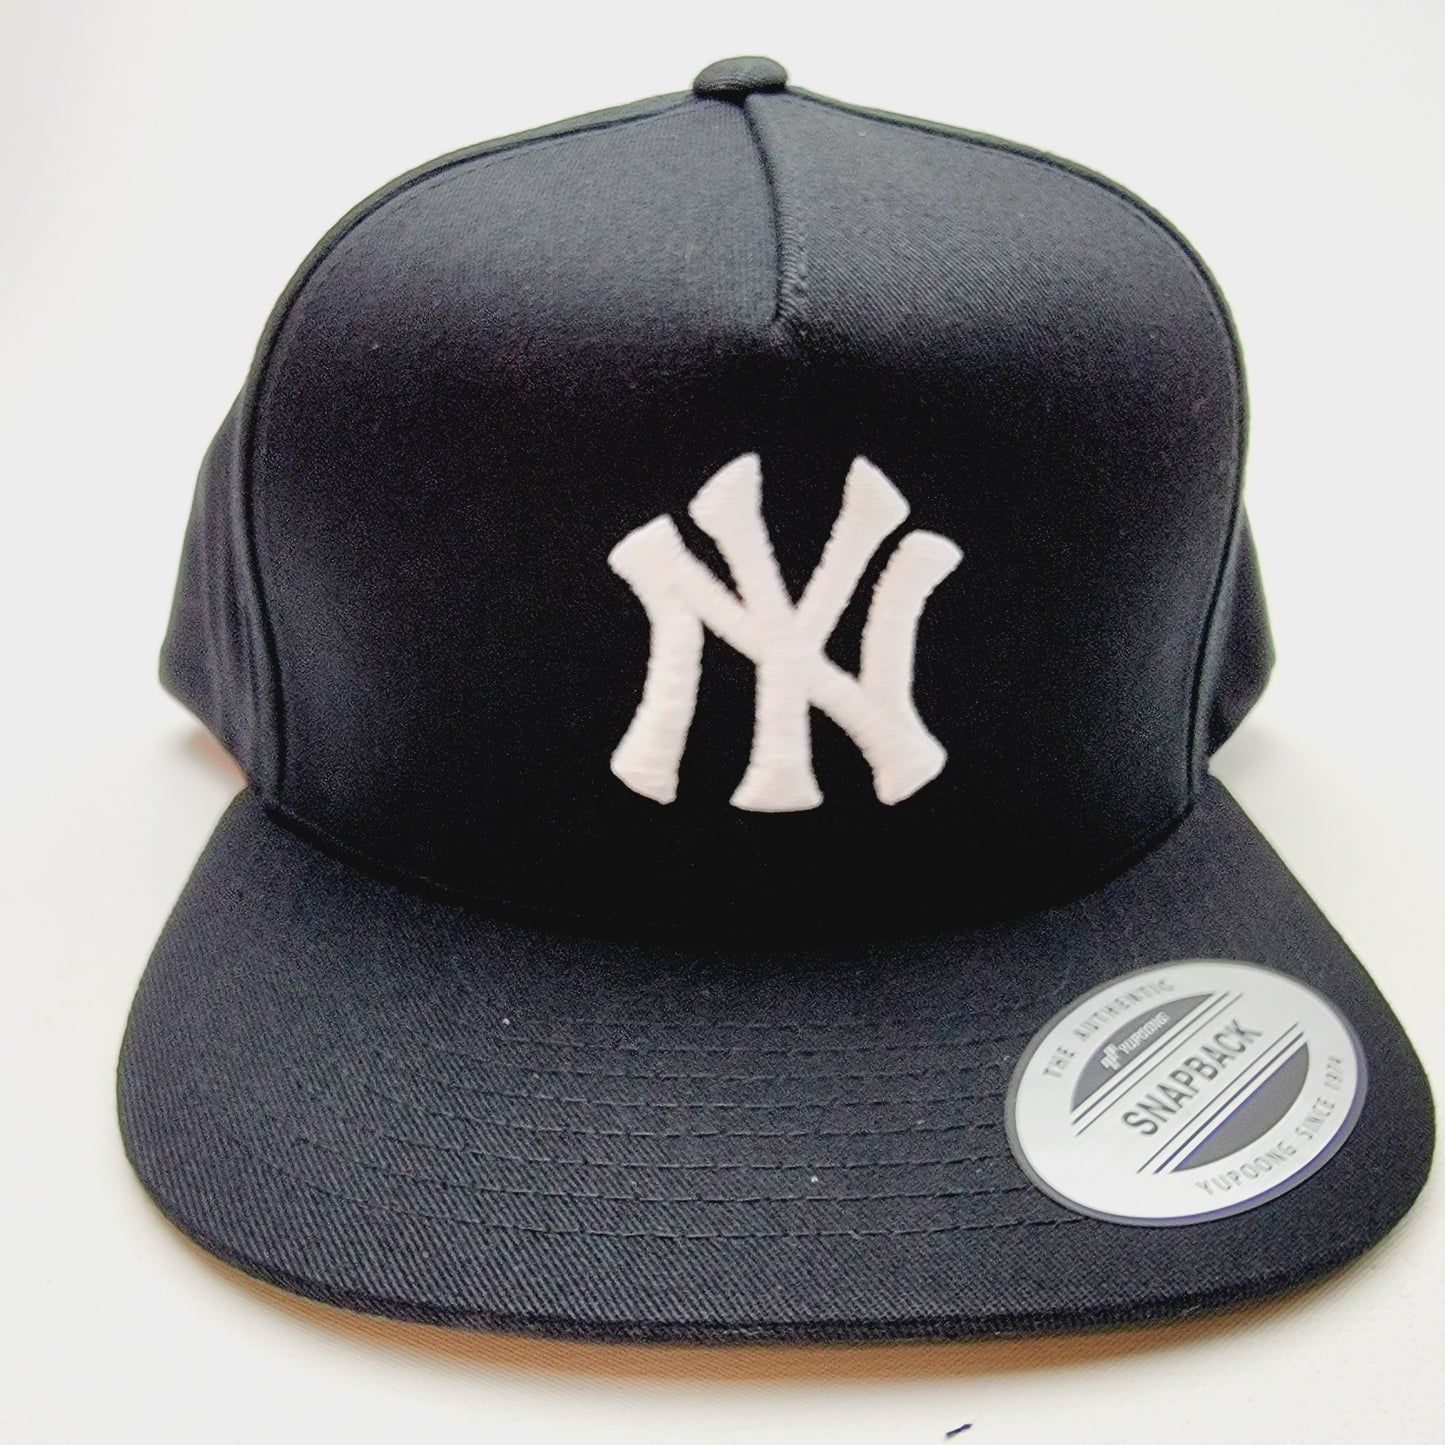 New York Yankees Flat Bill Trucker Full Cover Snapback Cap Hat Black